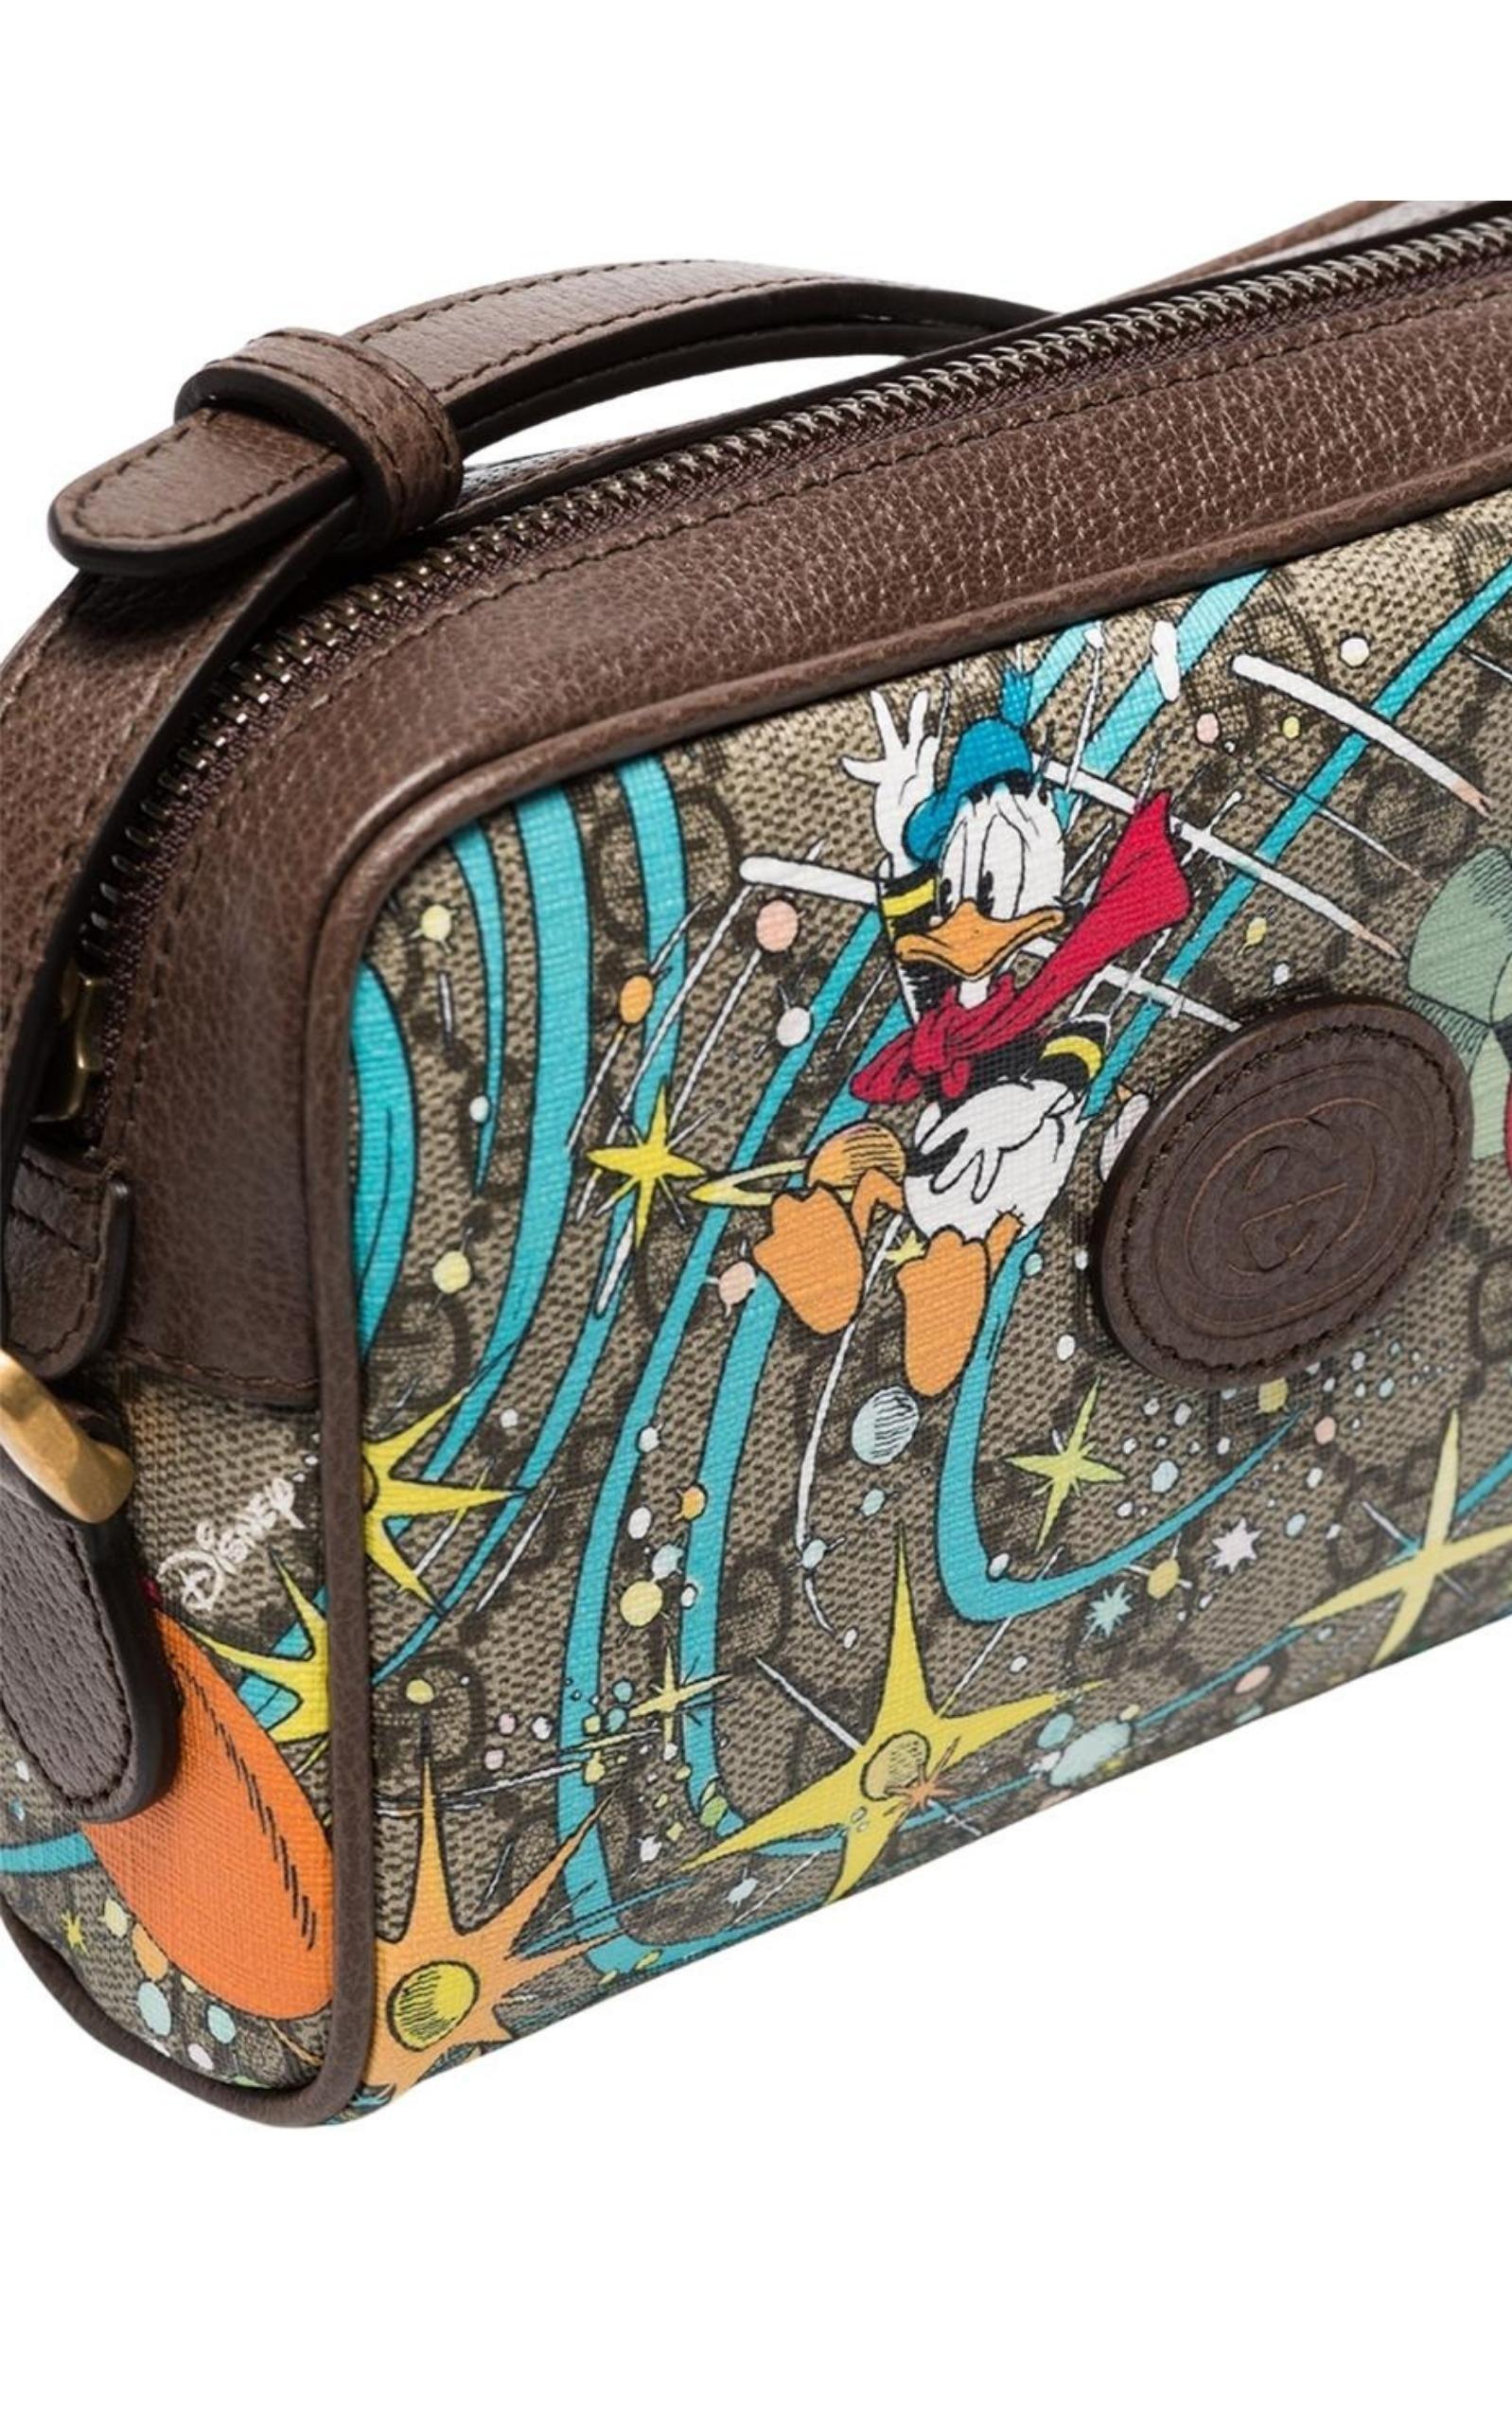 Disney x Gucci Messenger Bag Review 